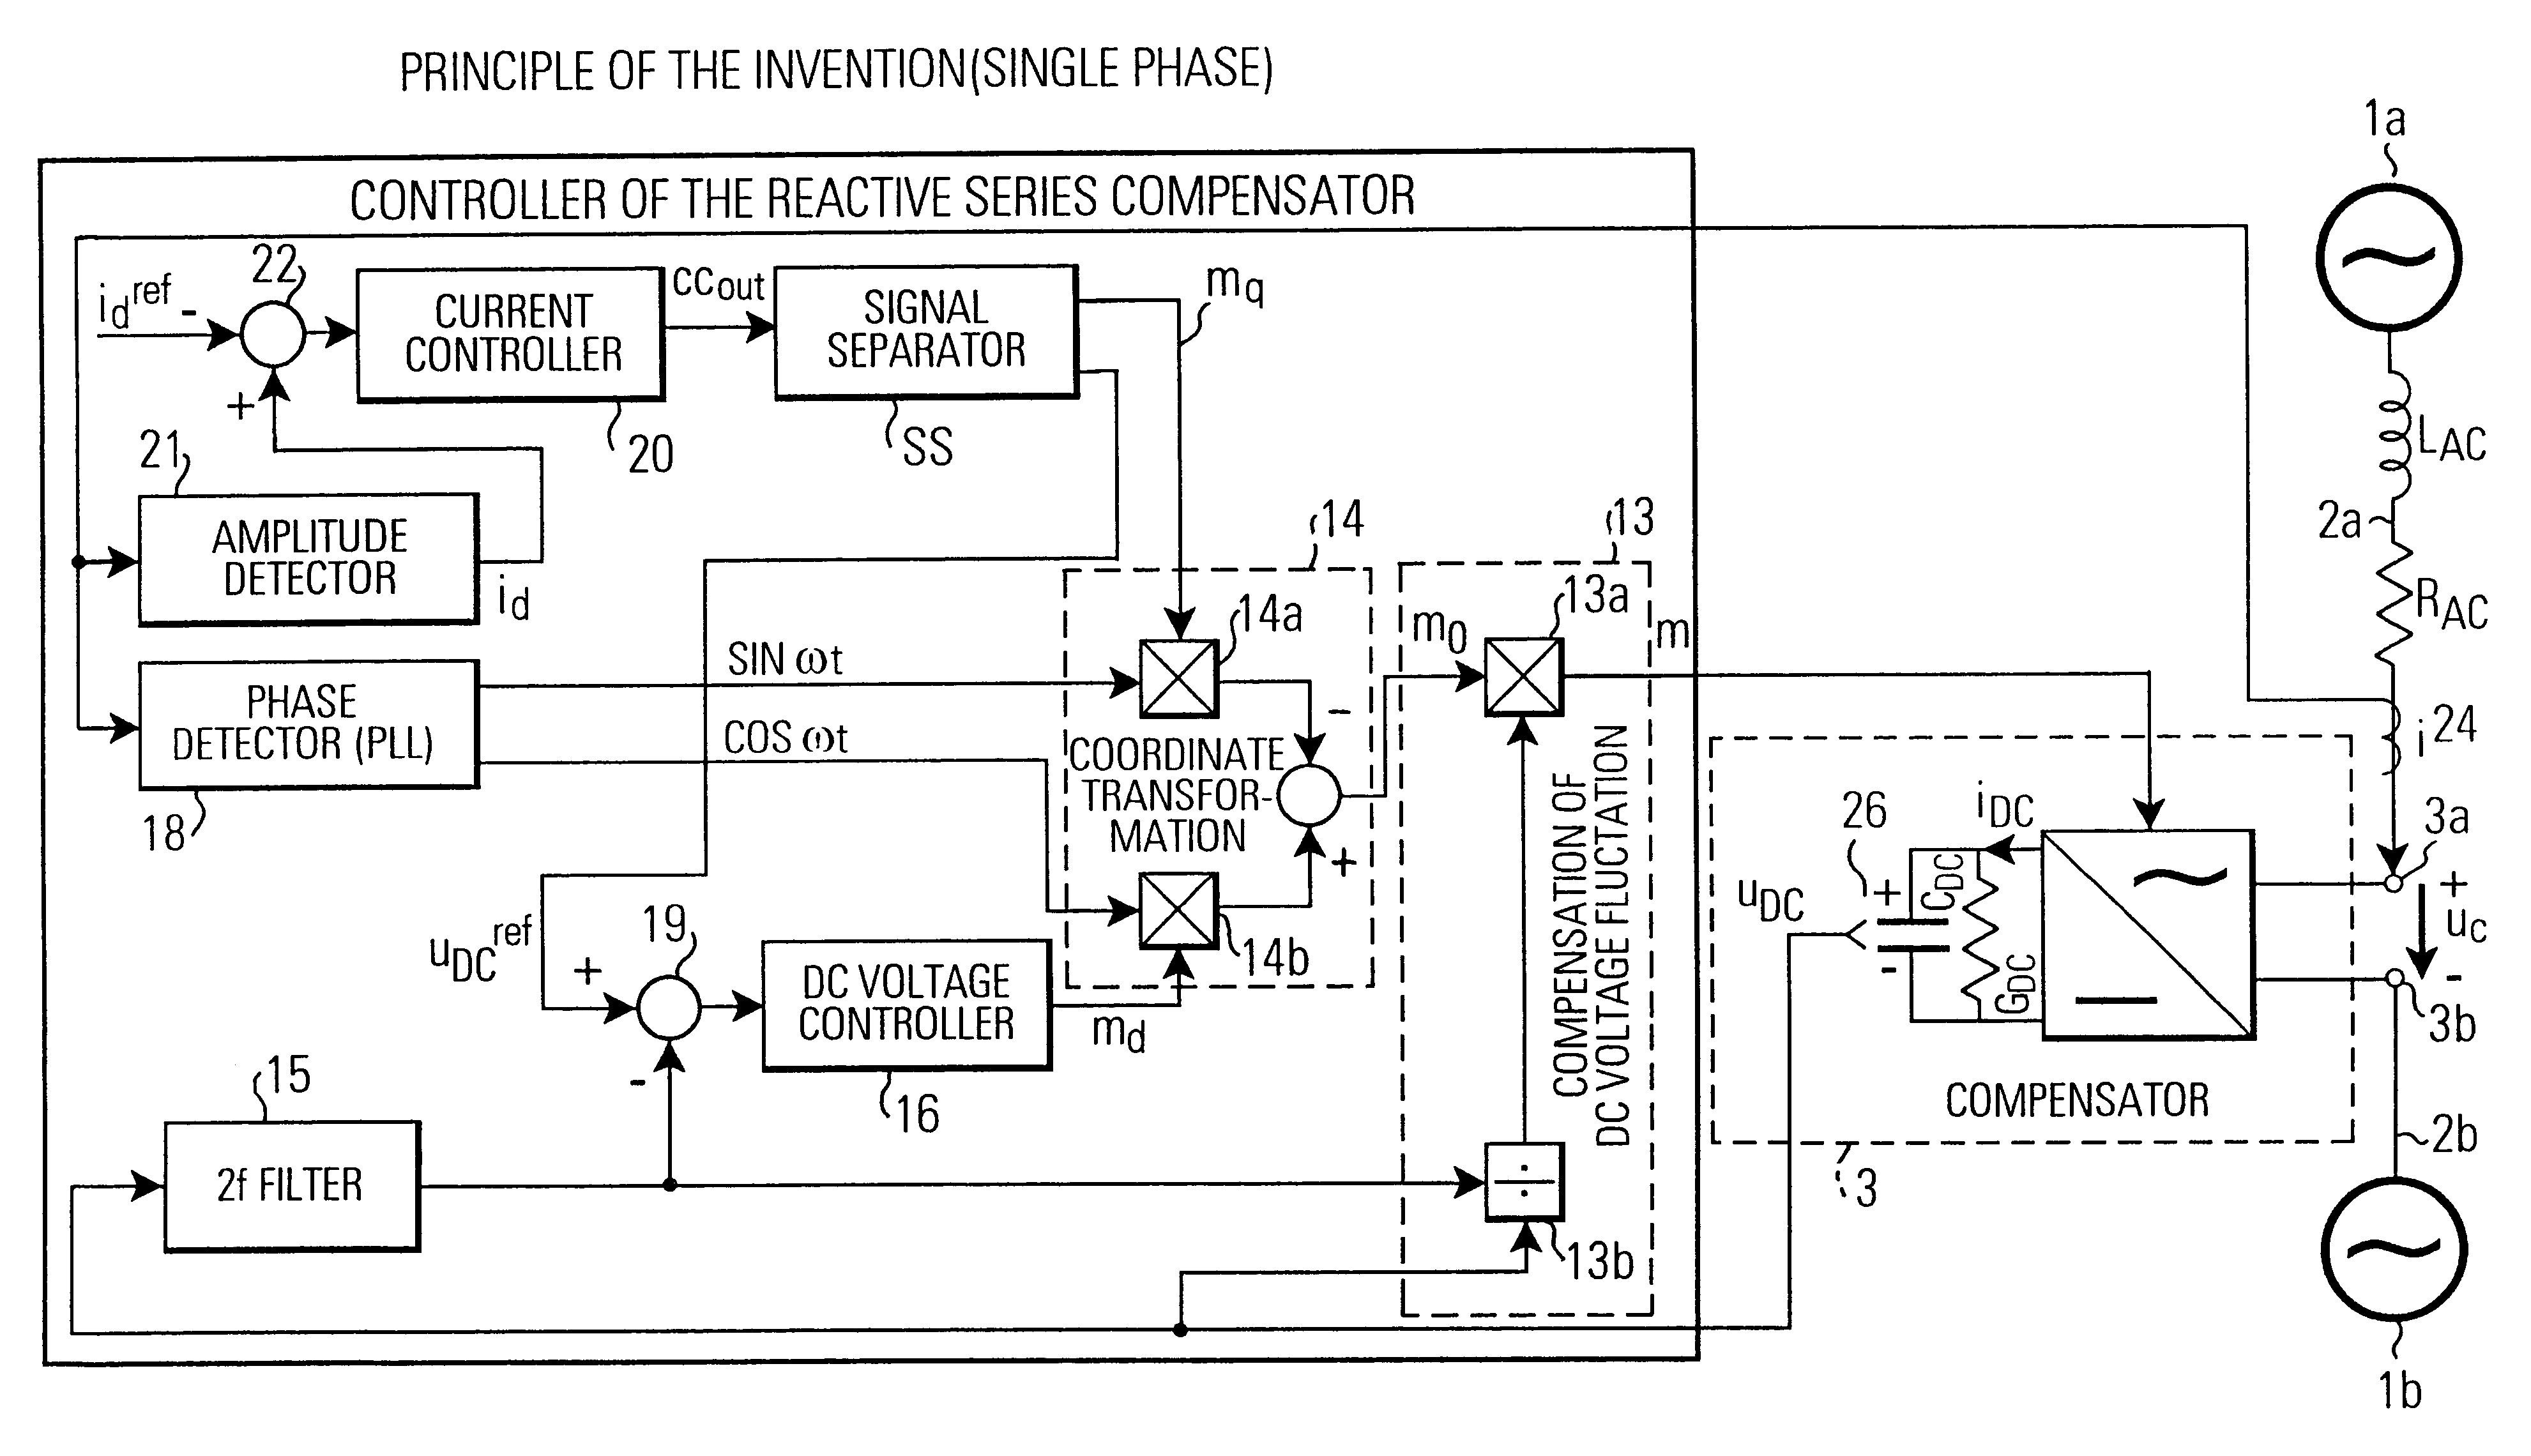 Controller of adjustable DC voltage for a transformerless reactive series compensator